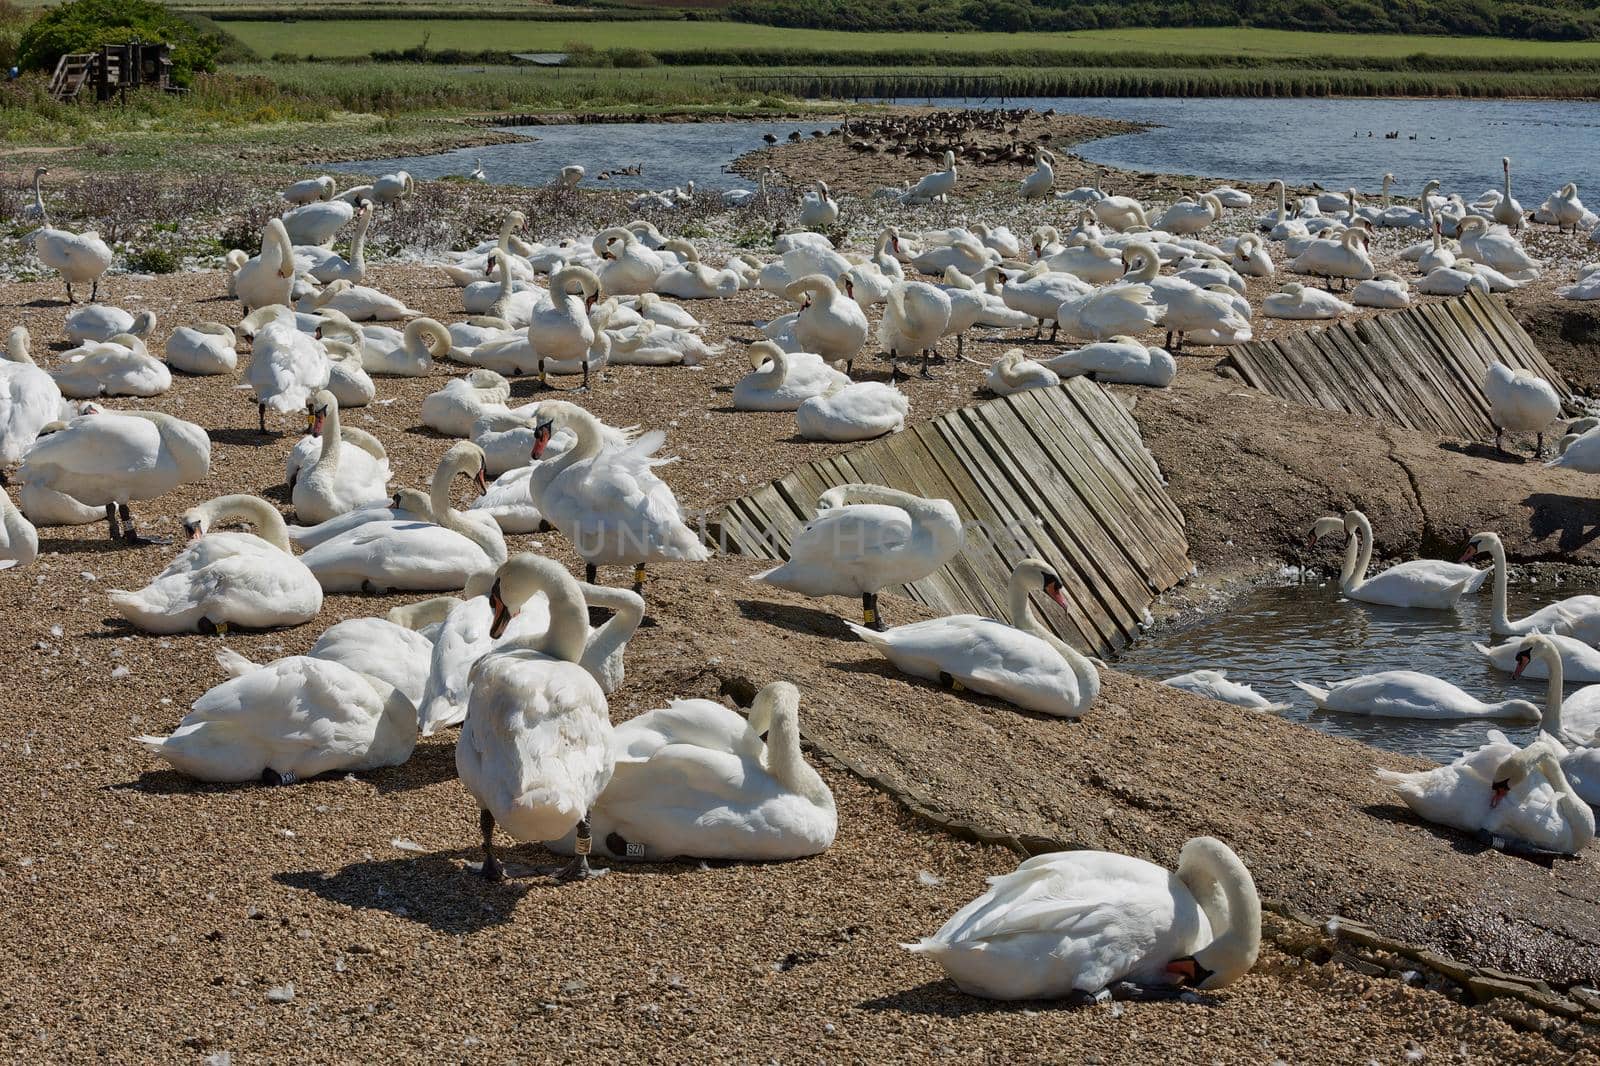 DORSET, ABBOTSBURY, UK - AUGUST 15, 2017: Flock of swans during feeding time at Abbotsbury swannery in Dorset, United Kingdom.